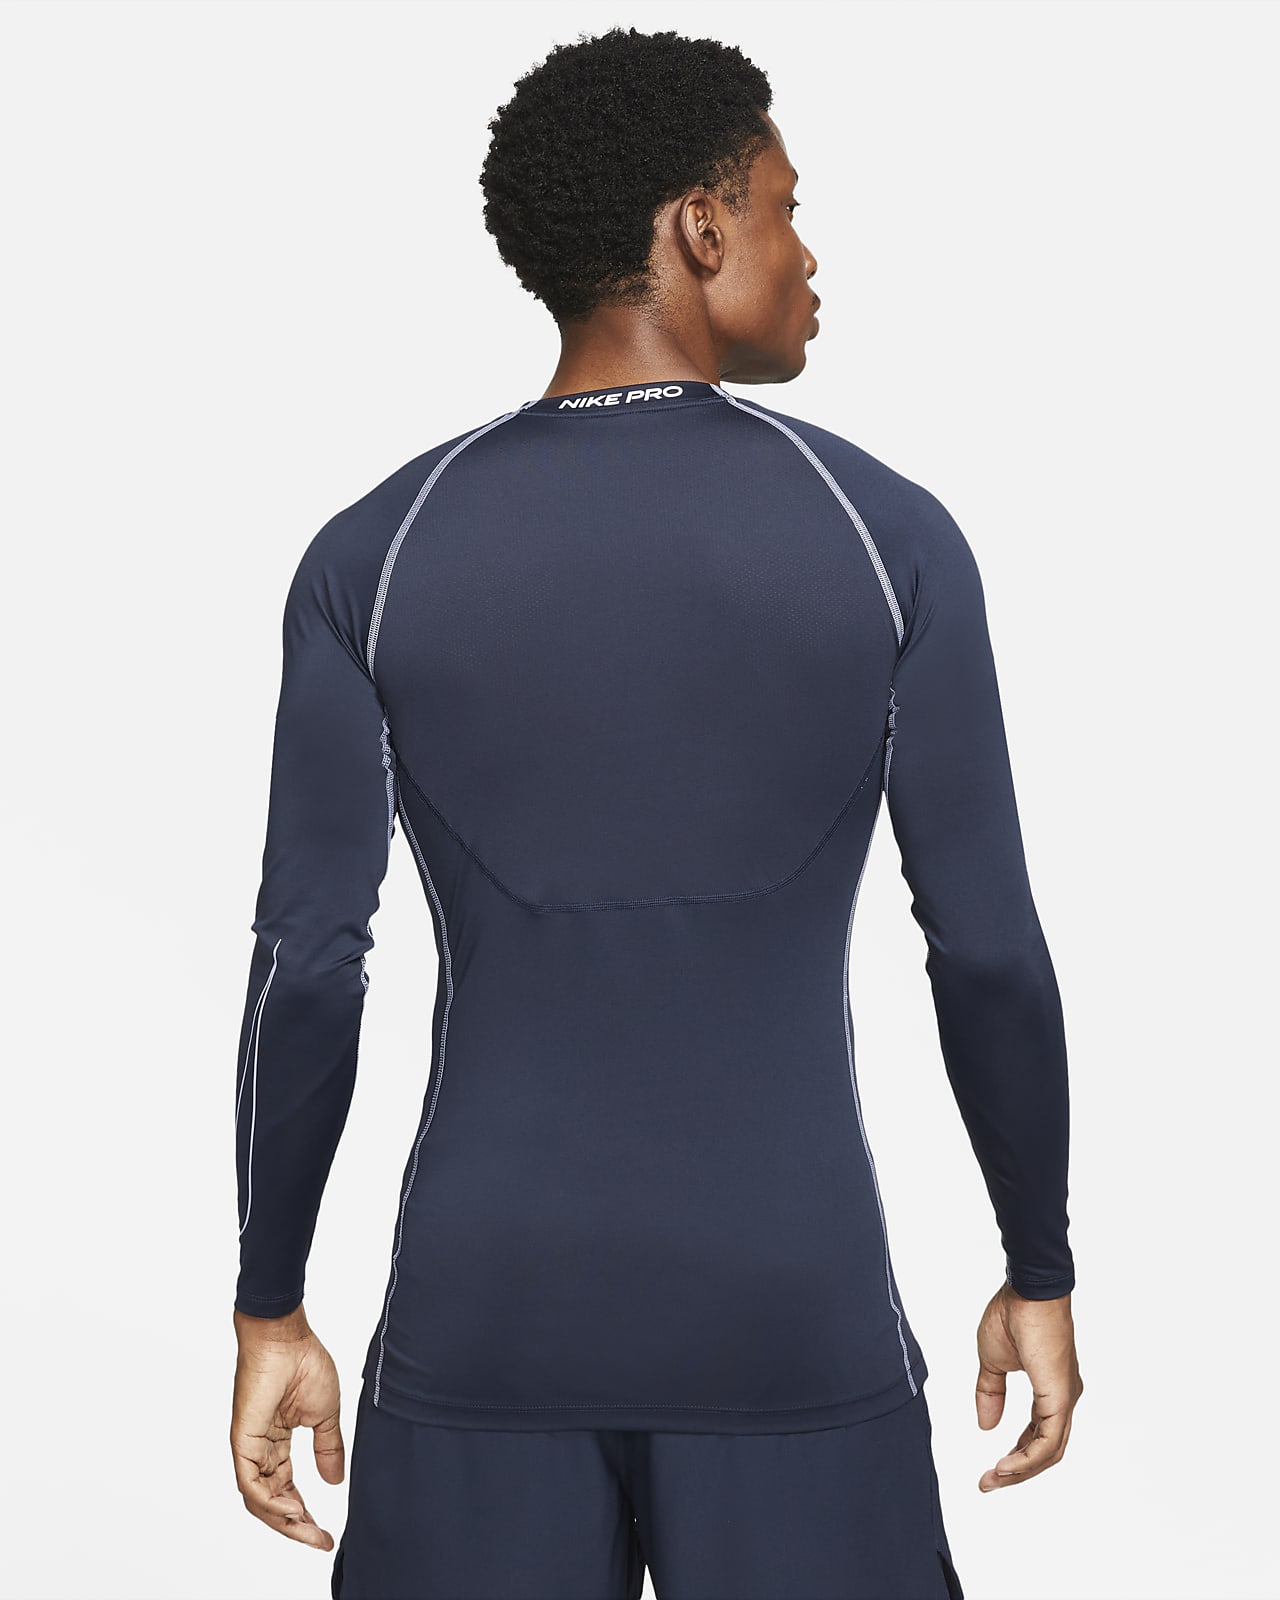 Nike Pro Dri-FIT Men's Tight Fit Long-Sleeve Top.